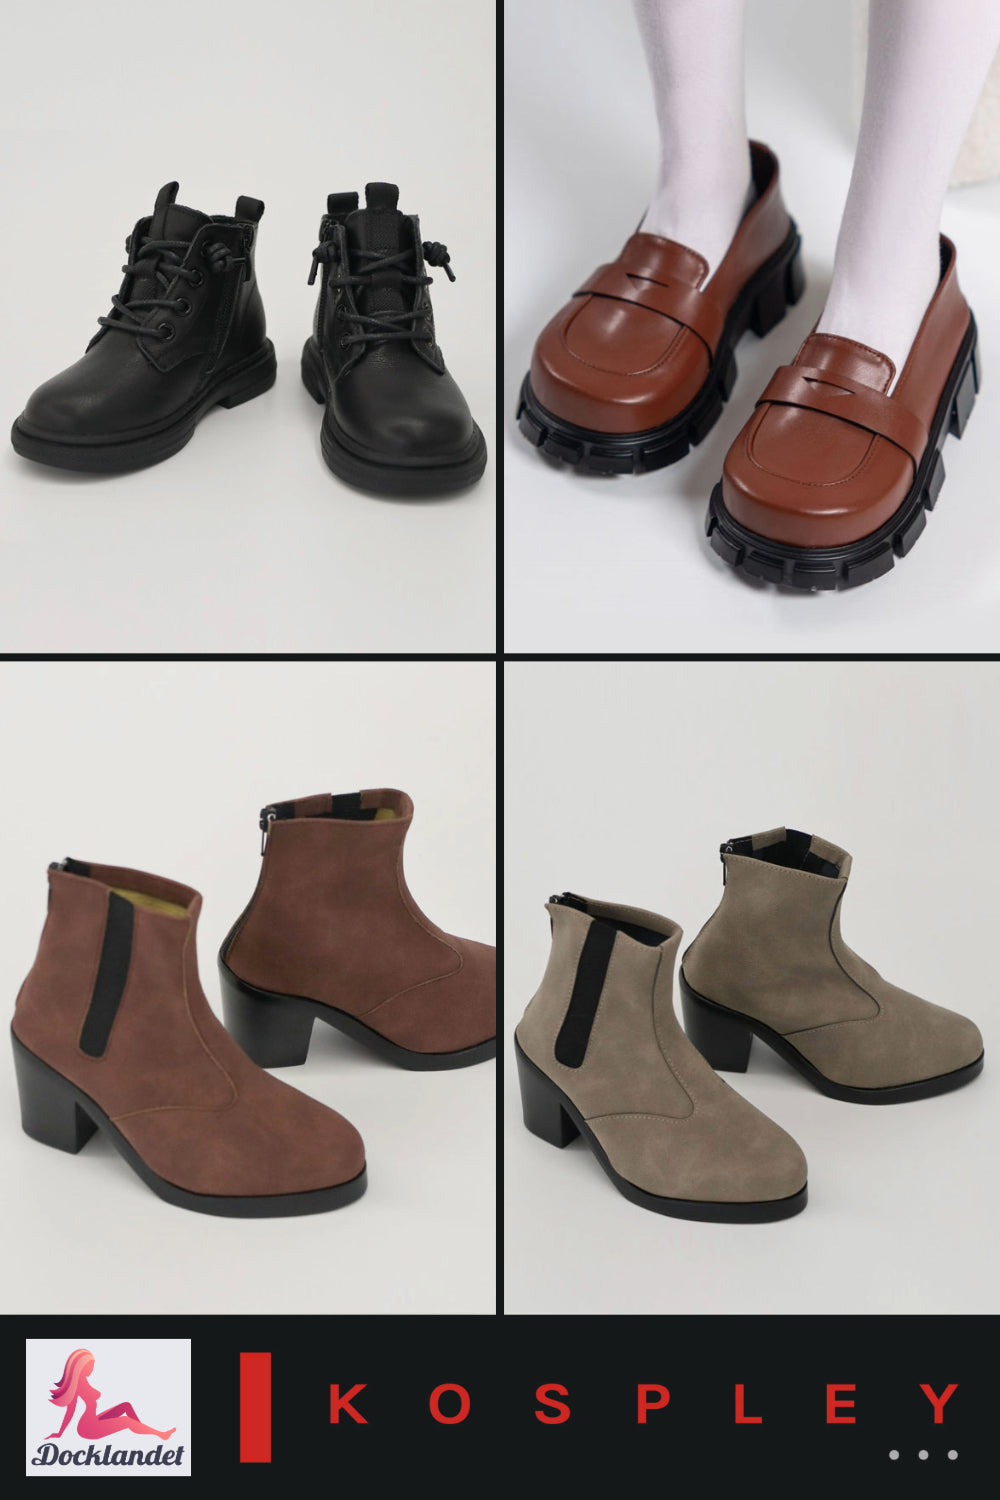 Schuhe MiniSize ( Kospley Kleidung )